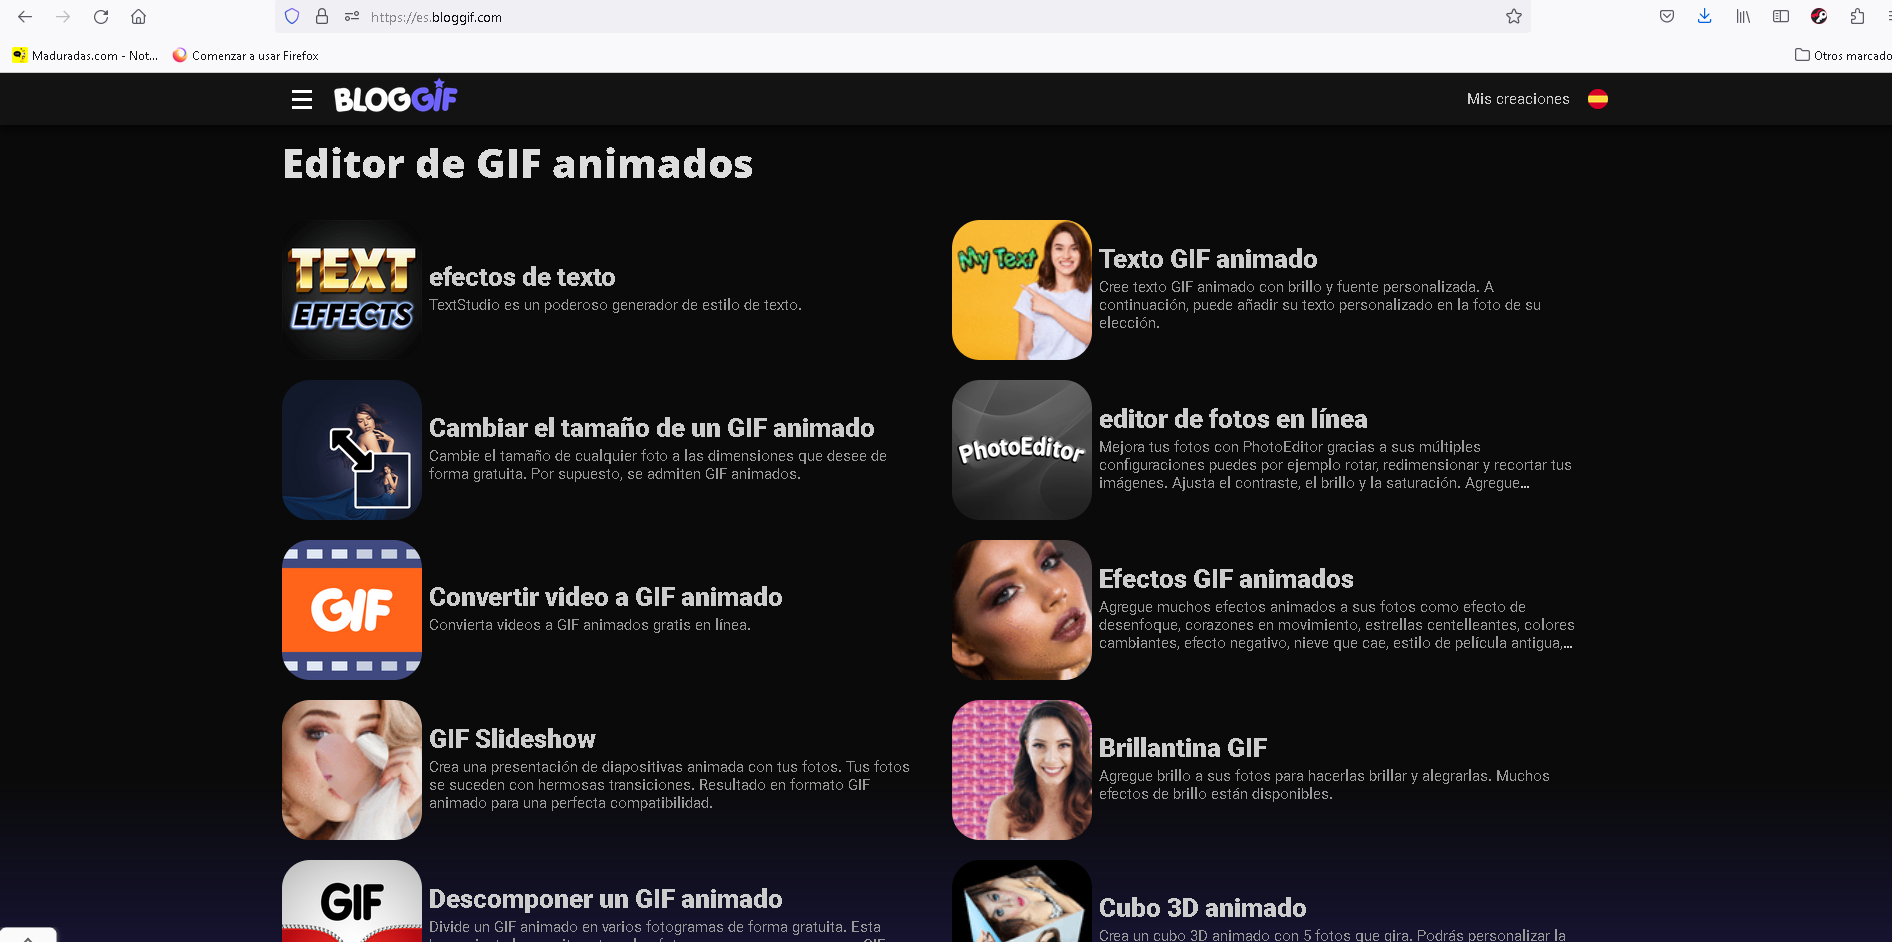 Editor de GIF animado - BlogGIF